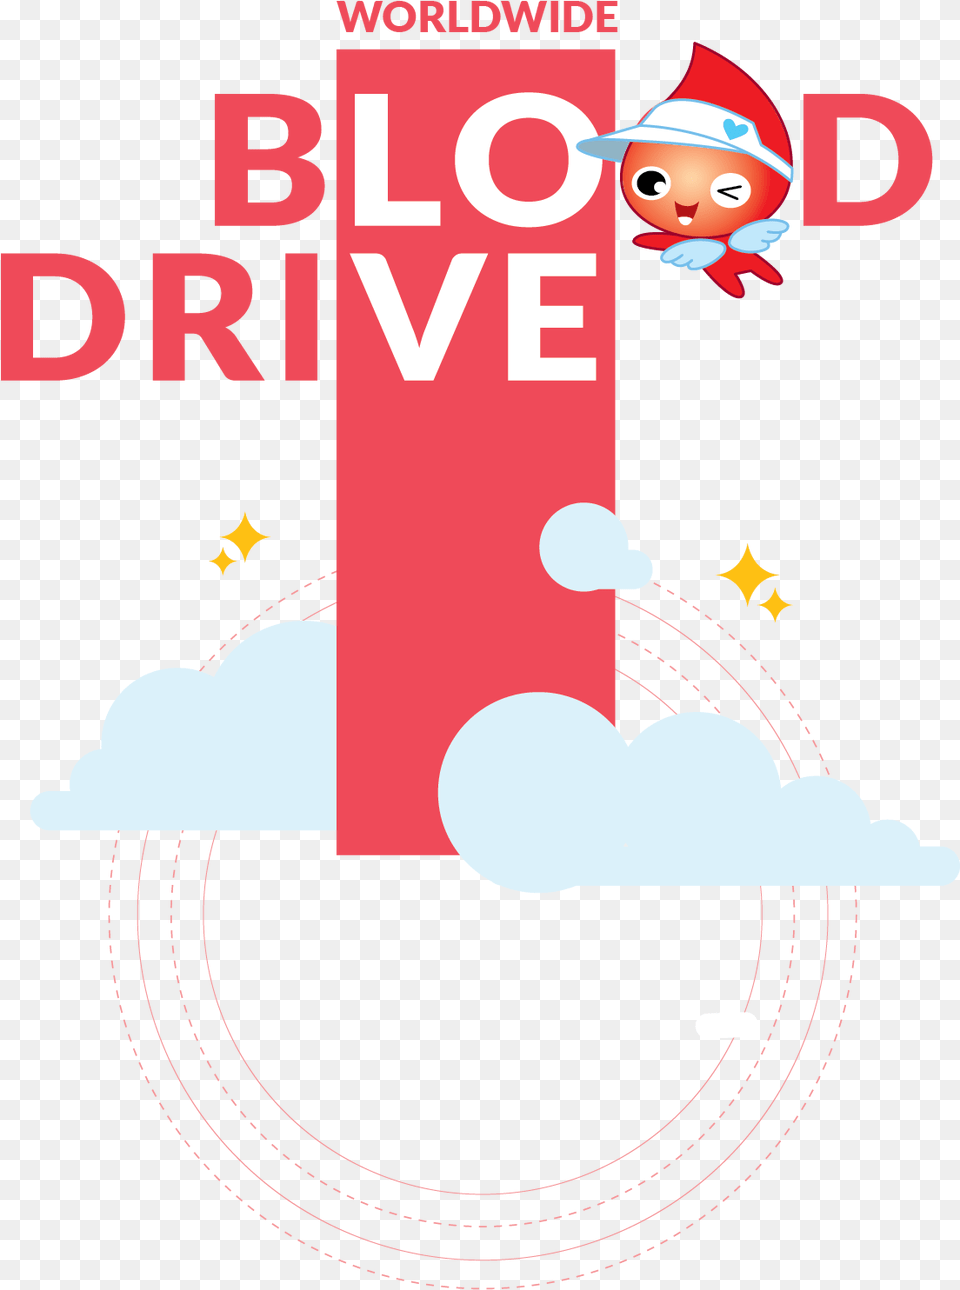 Worldwide Blooddrivelogo2 International Weloveu Foundation Dot, Advertisement, Poster, Baby, Person Png Image